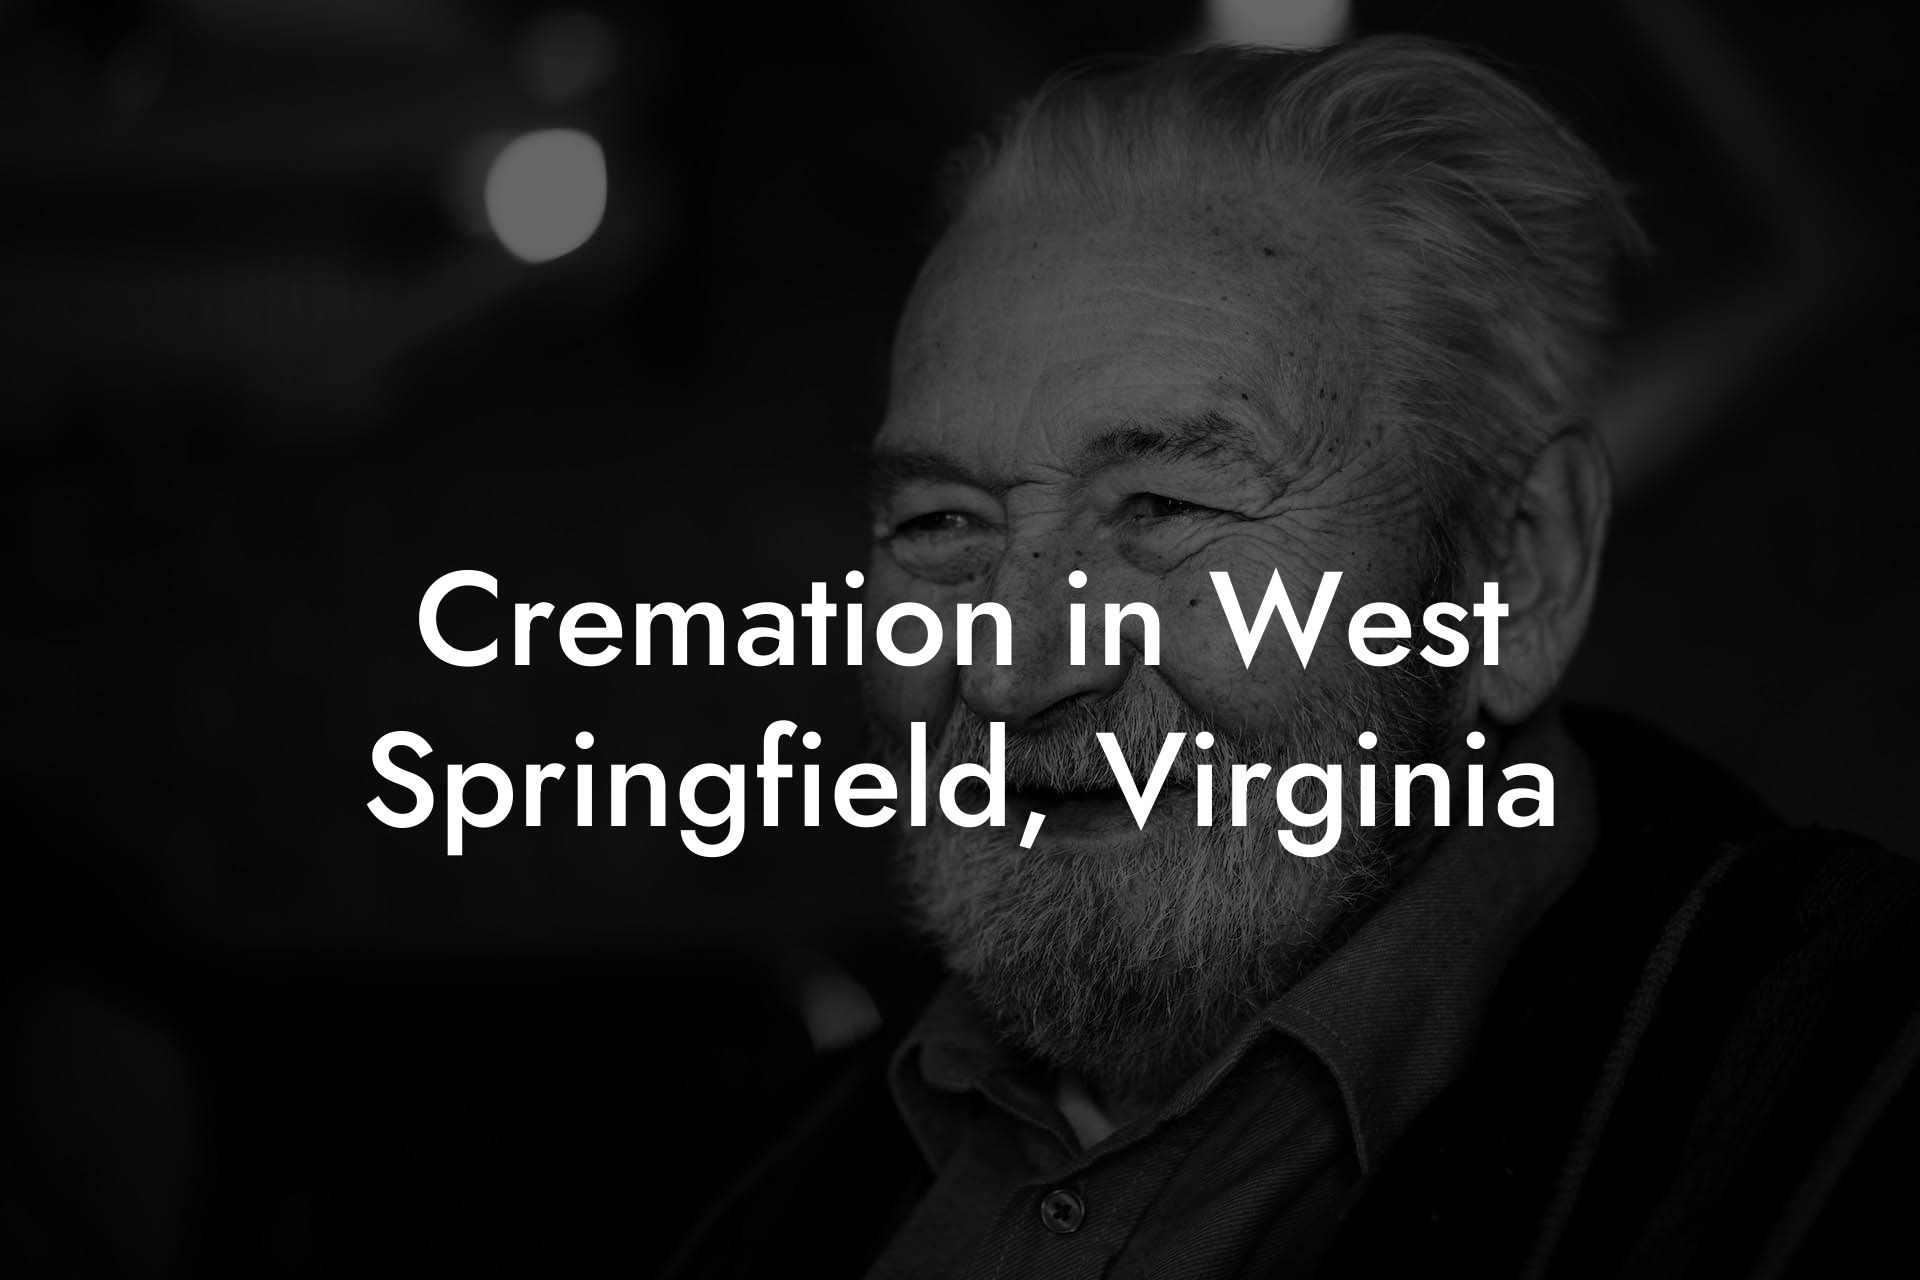 Cremation in West Springfield, Virginia